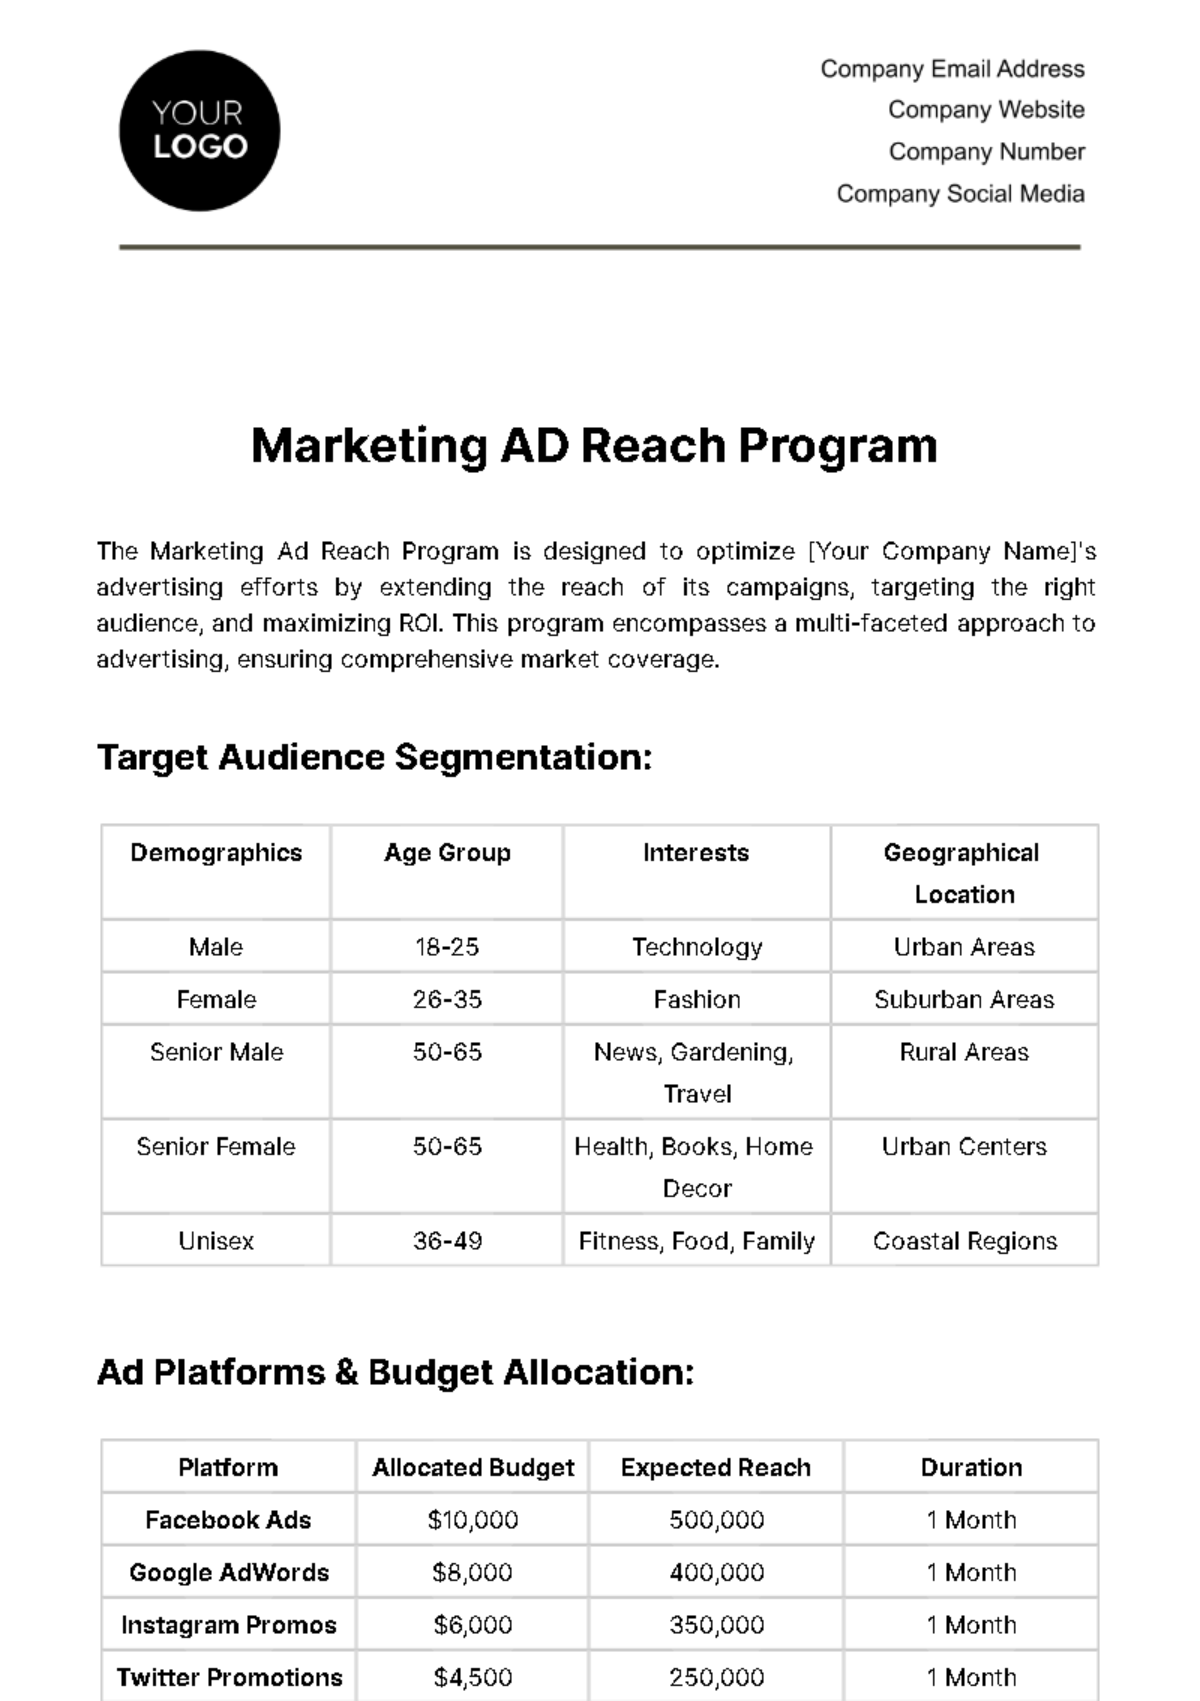 Marketing Ad Reach Program Template